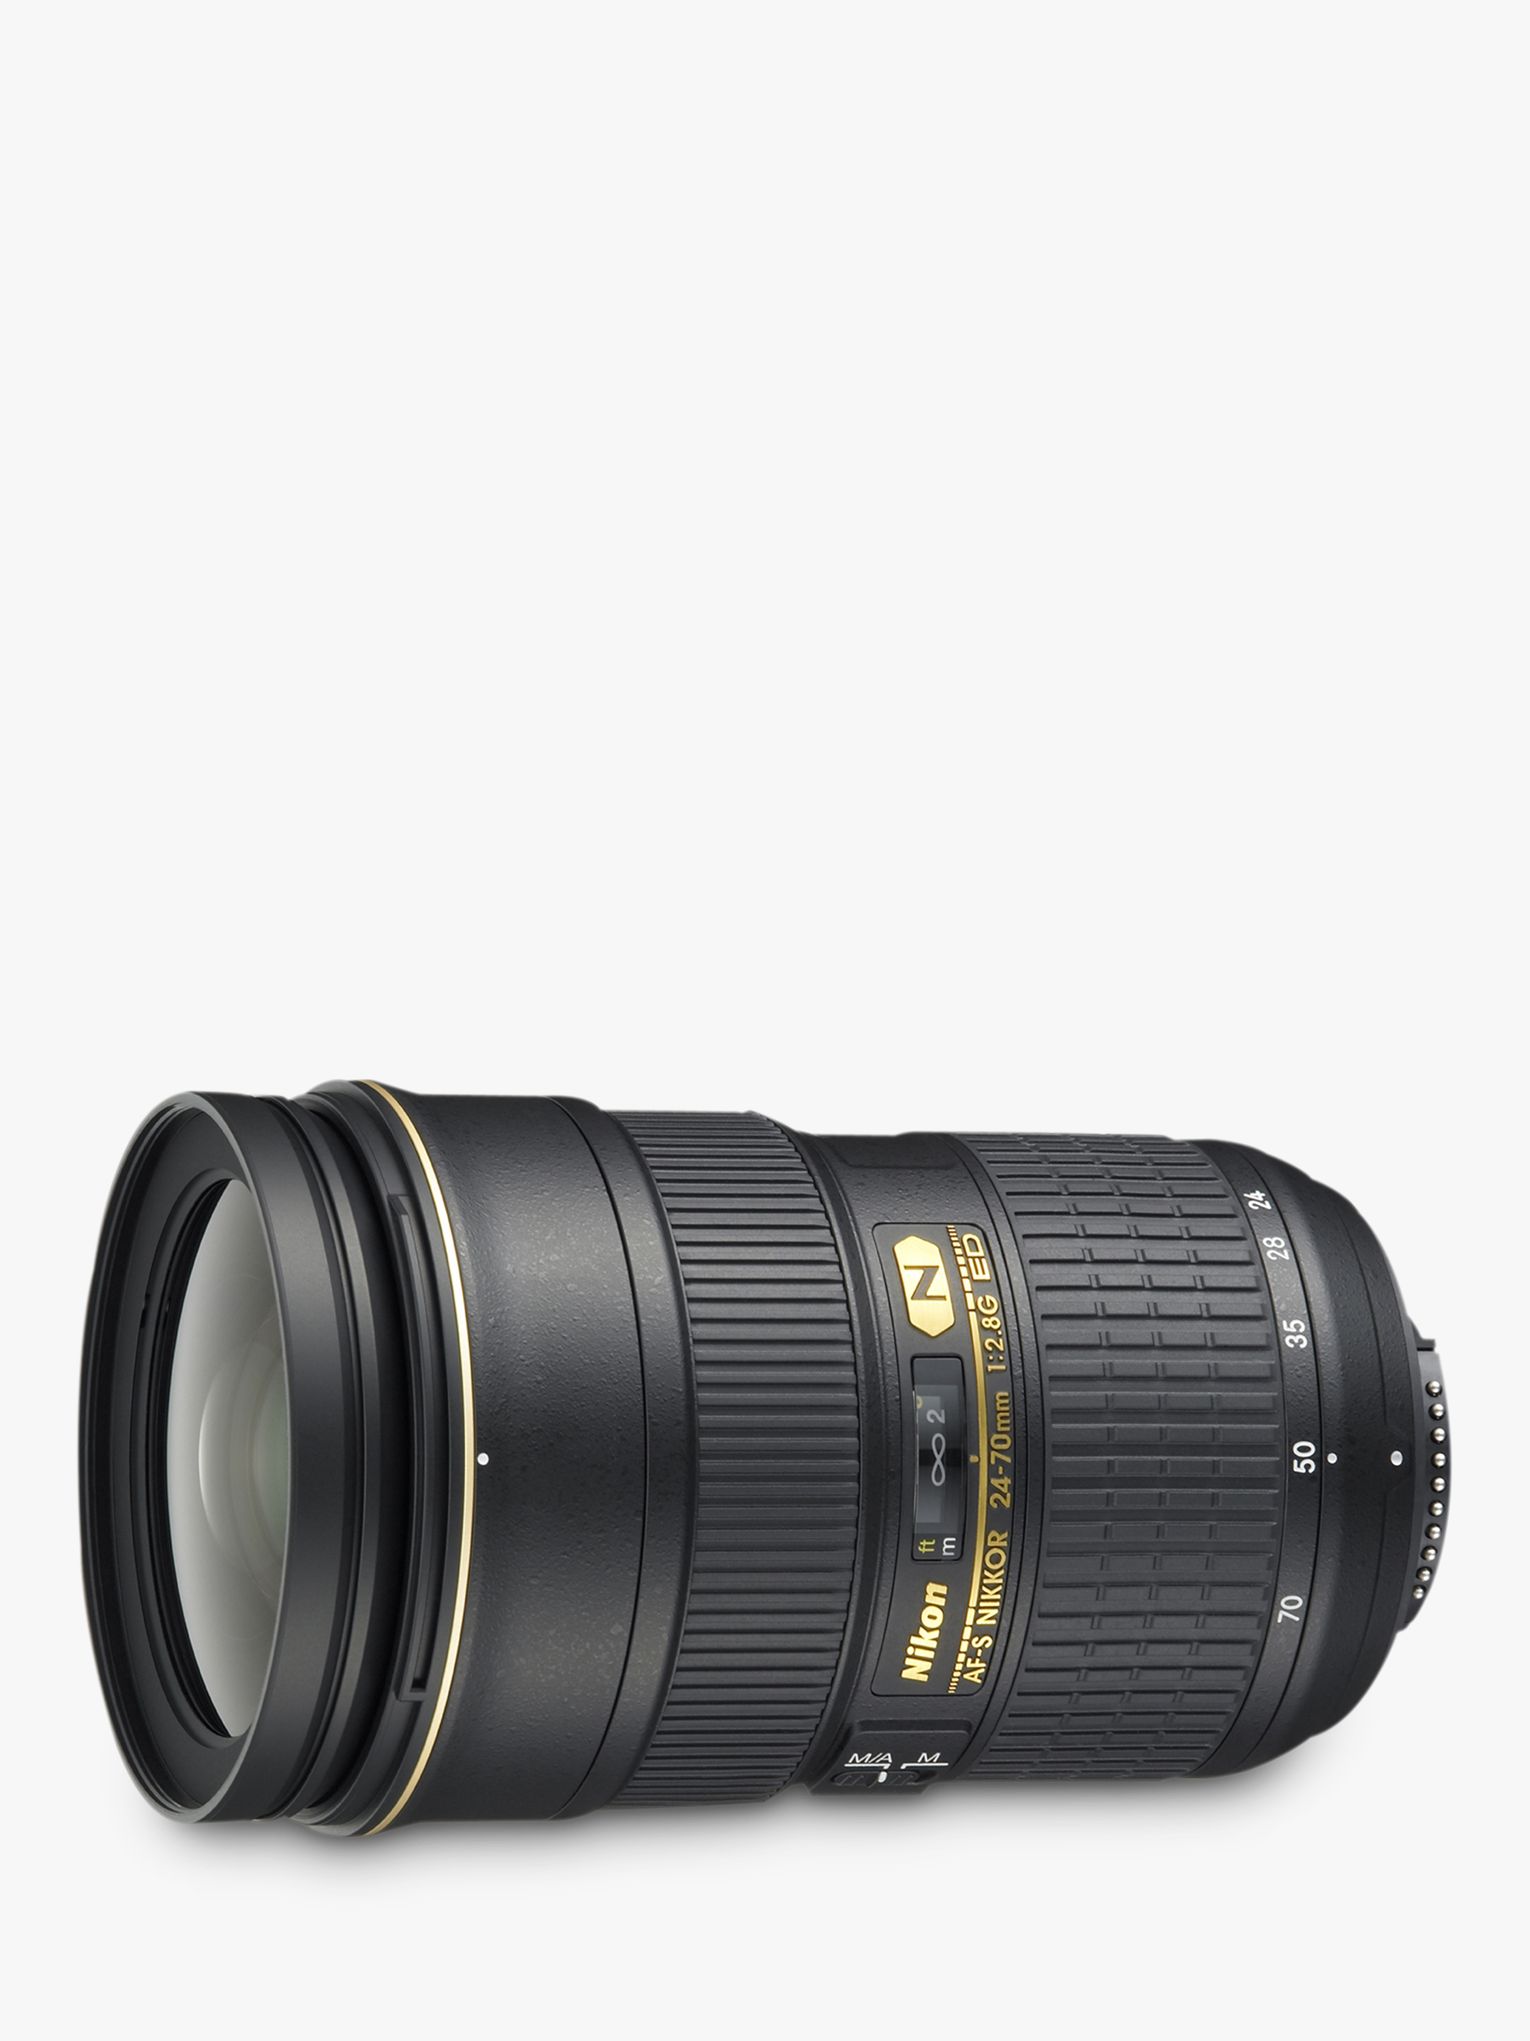 Image of Nikon FX 2470mm f28G ED AFS Telephoto Lens